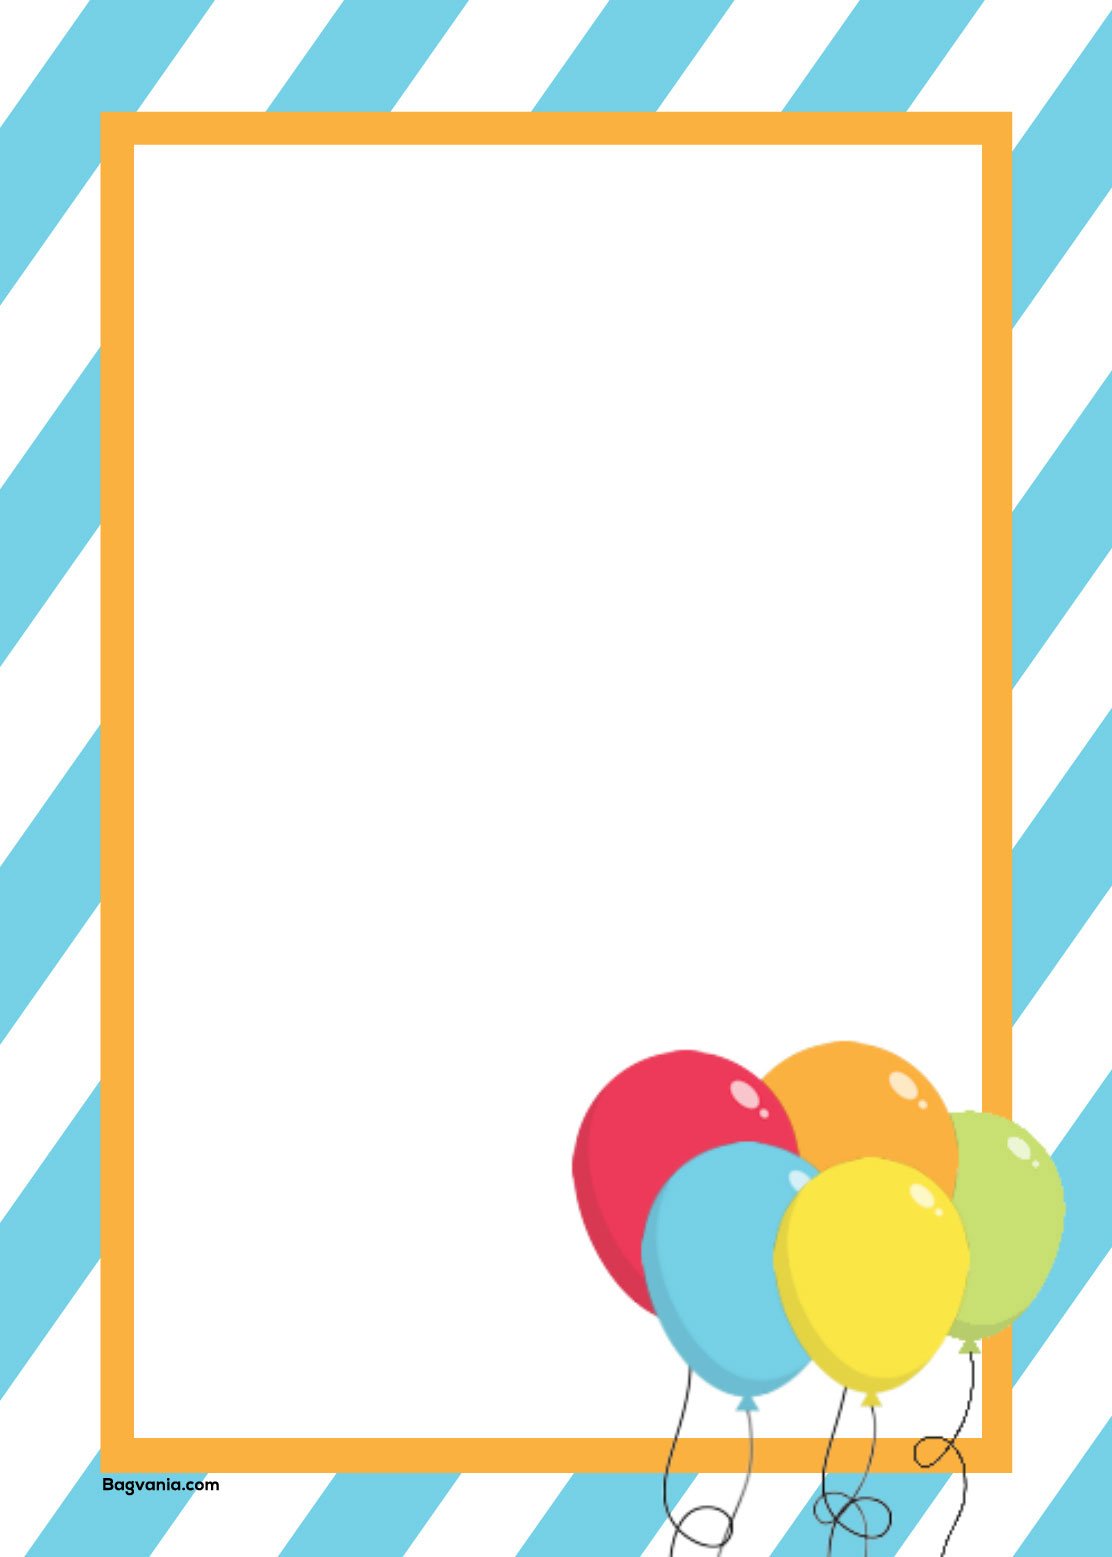 free-printable-birthday-party-invitations-bagvania-free-printable